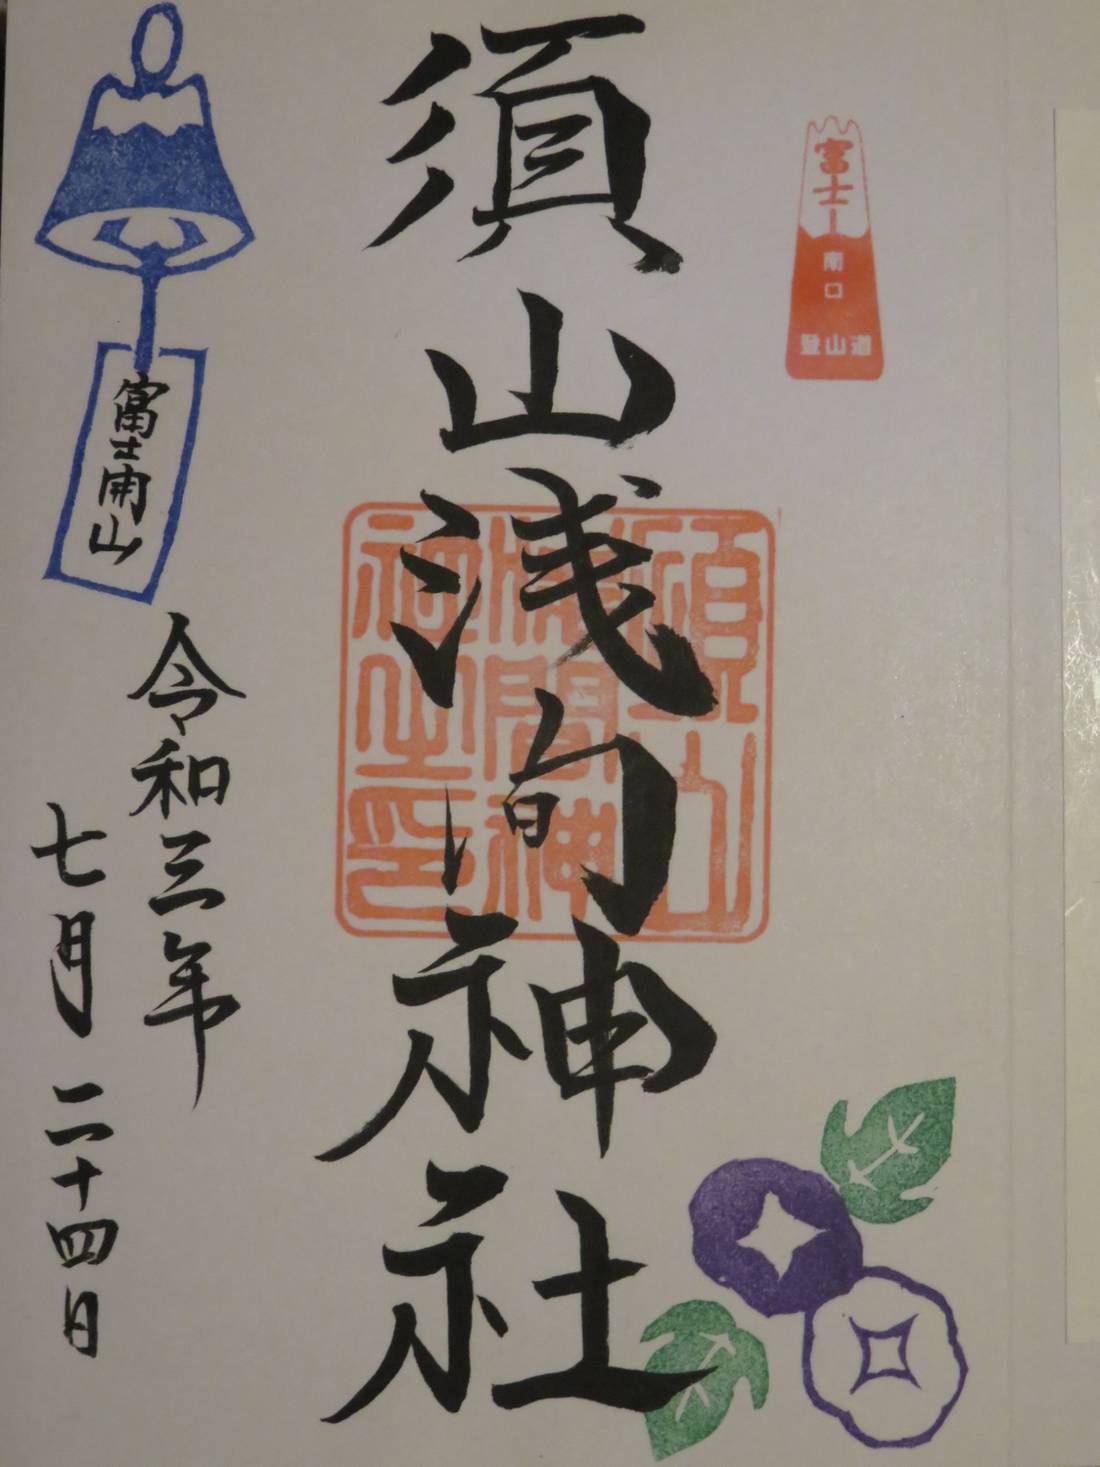 The shrine stamp of Suyama Sengen Shrine